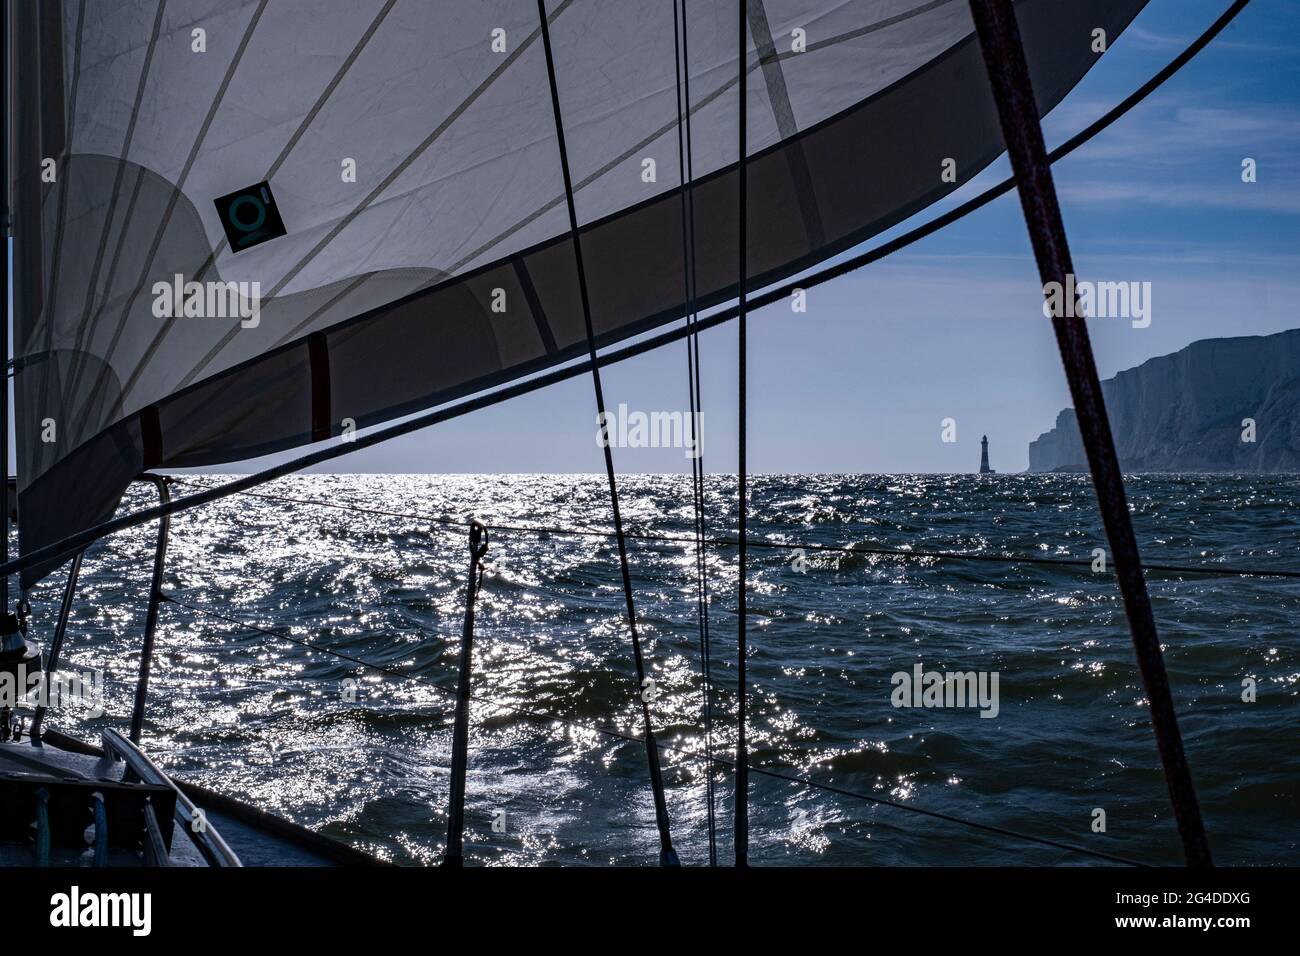 Sailing the north sea Stock Photo